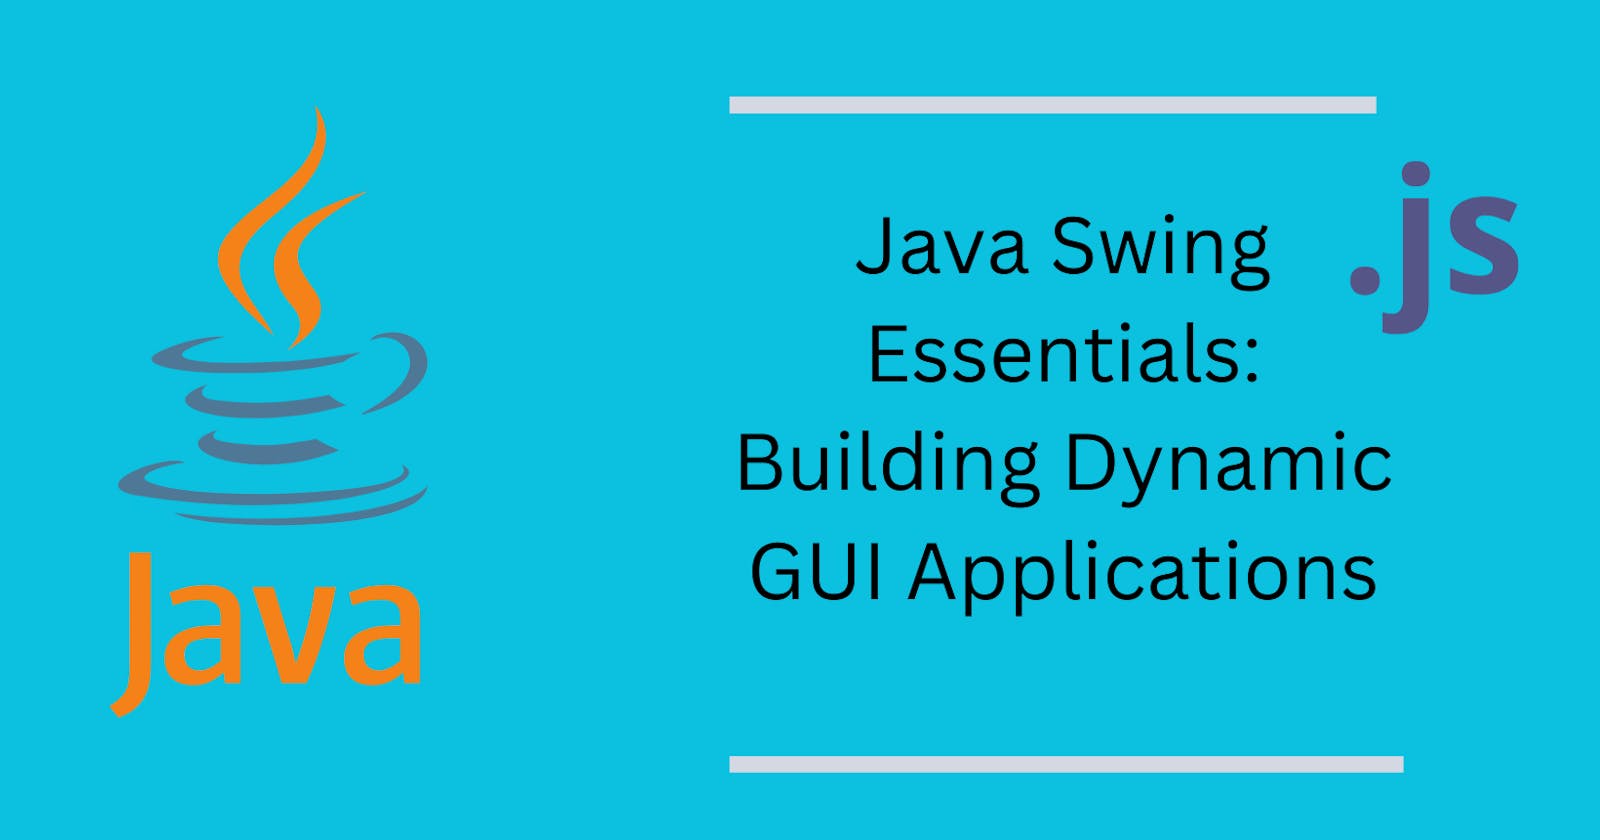 Java Swing Essentials: Building Dynamic GUI Applications